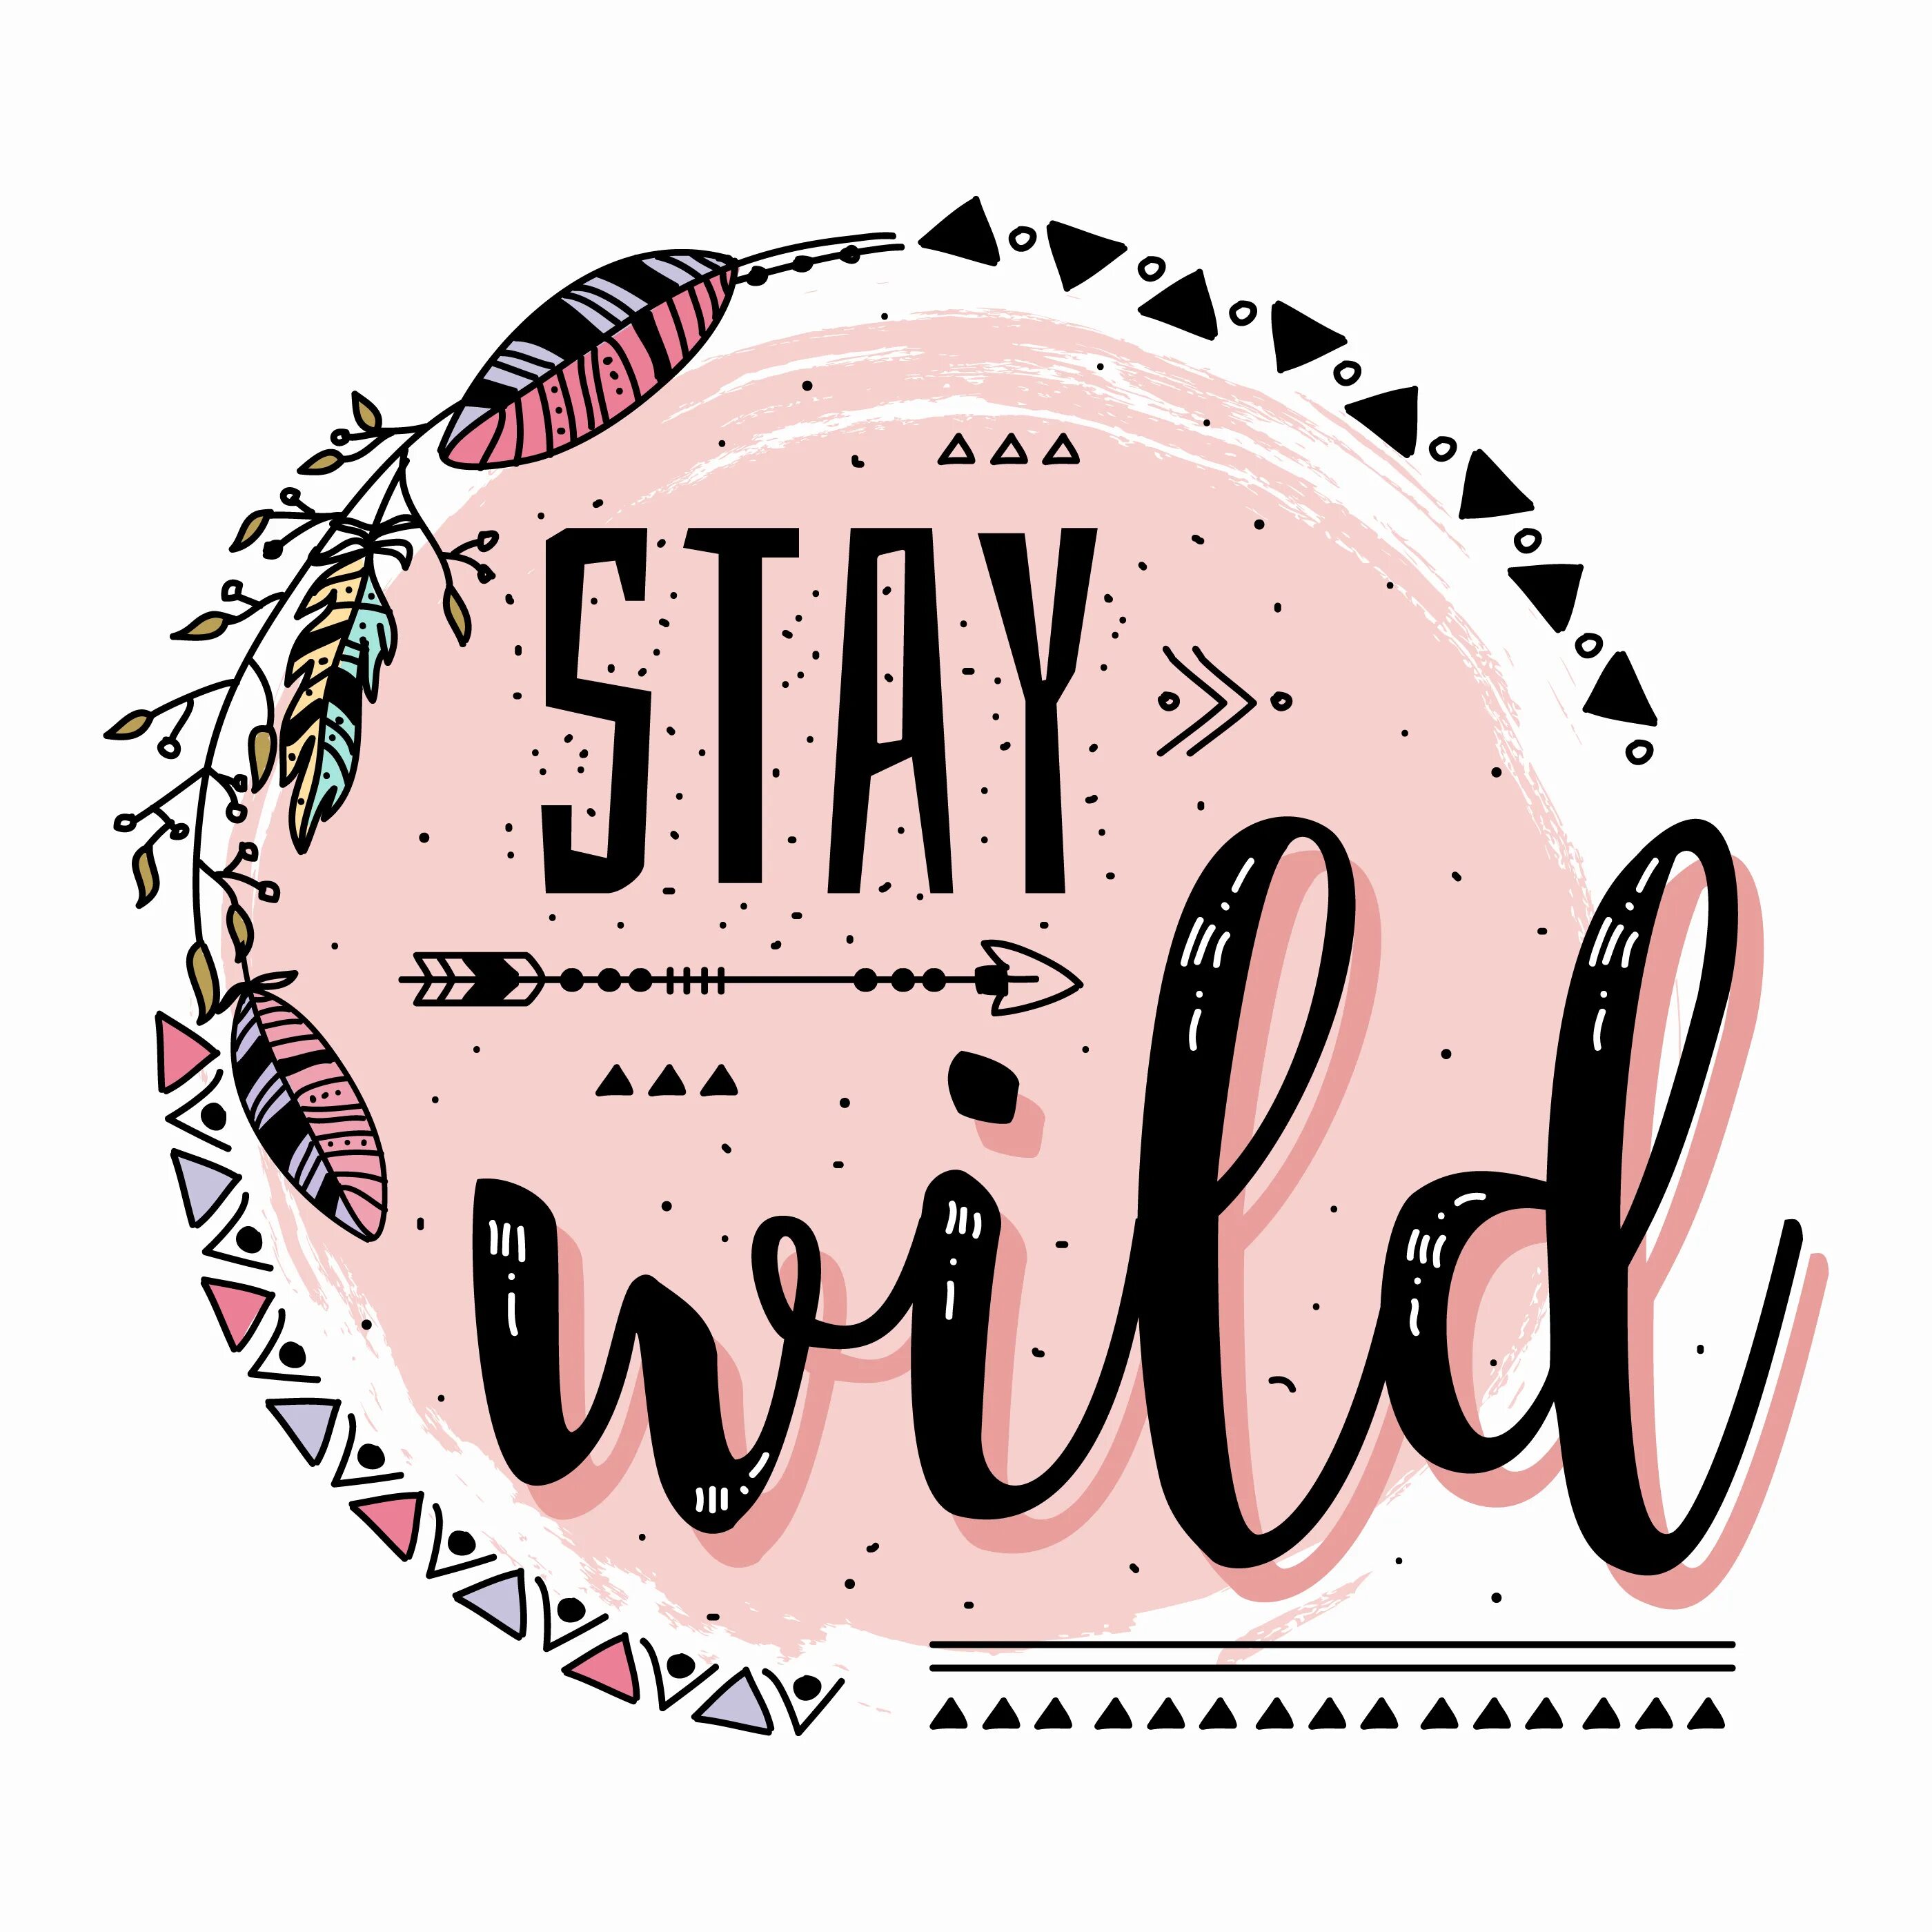 Wild перевести на русский. Stay Wild. Stay Wild надпись. Stay Wild перевод.